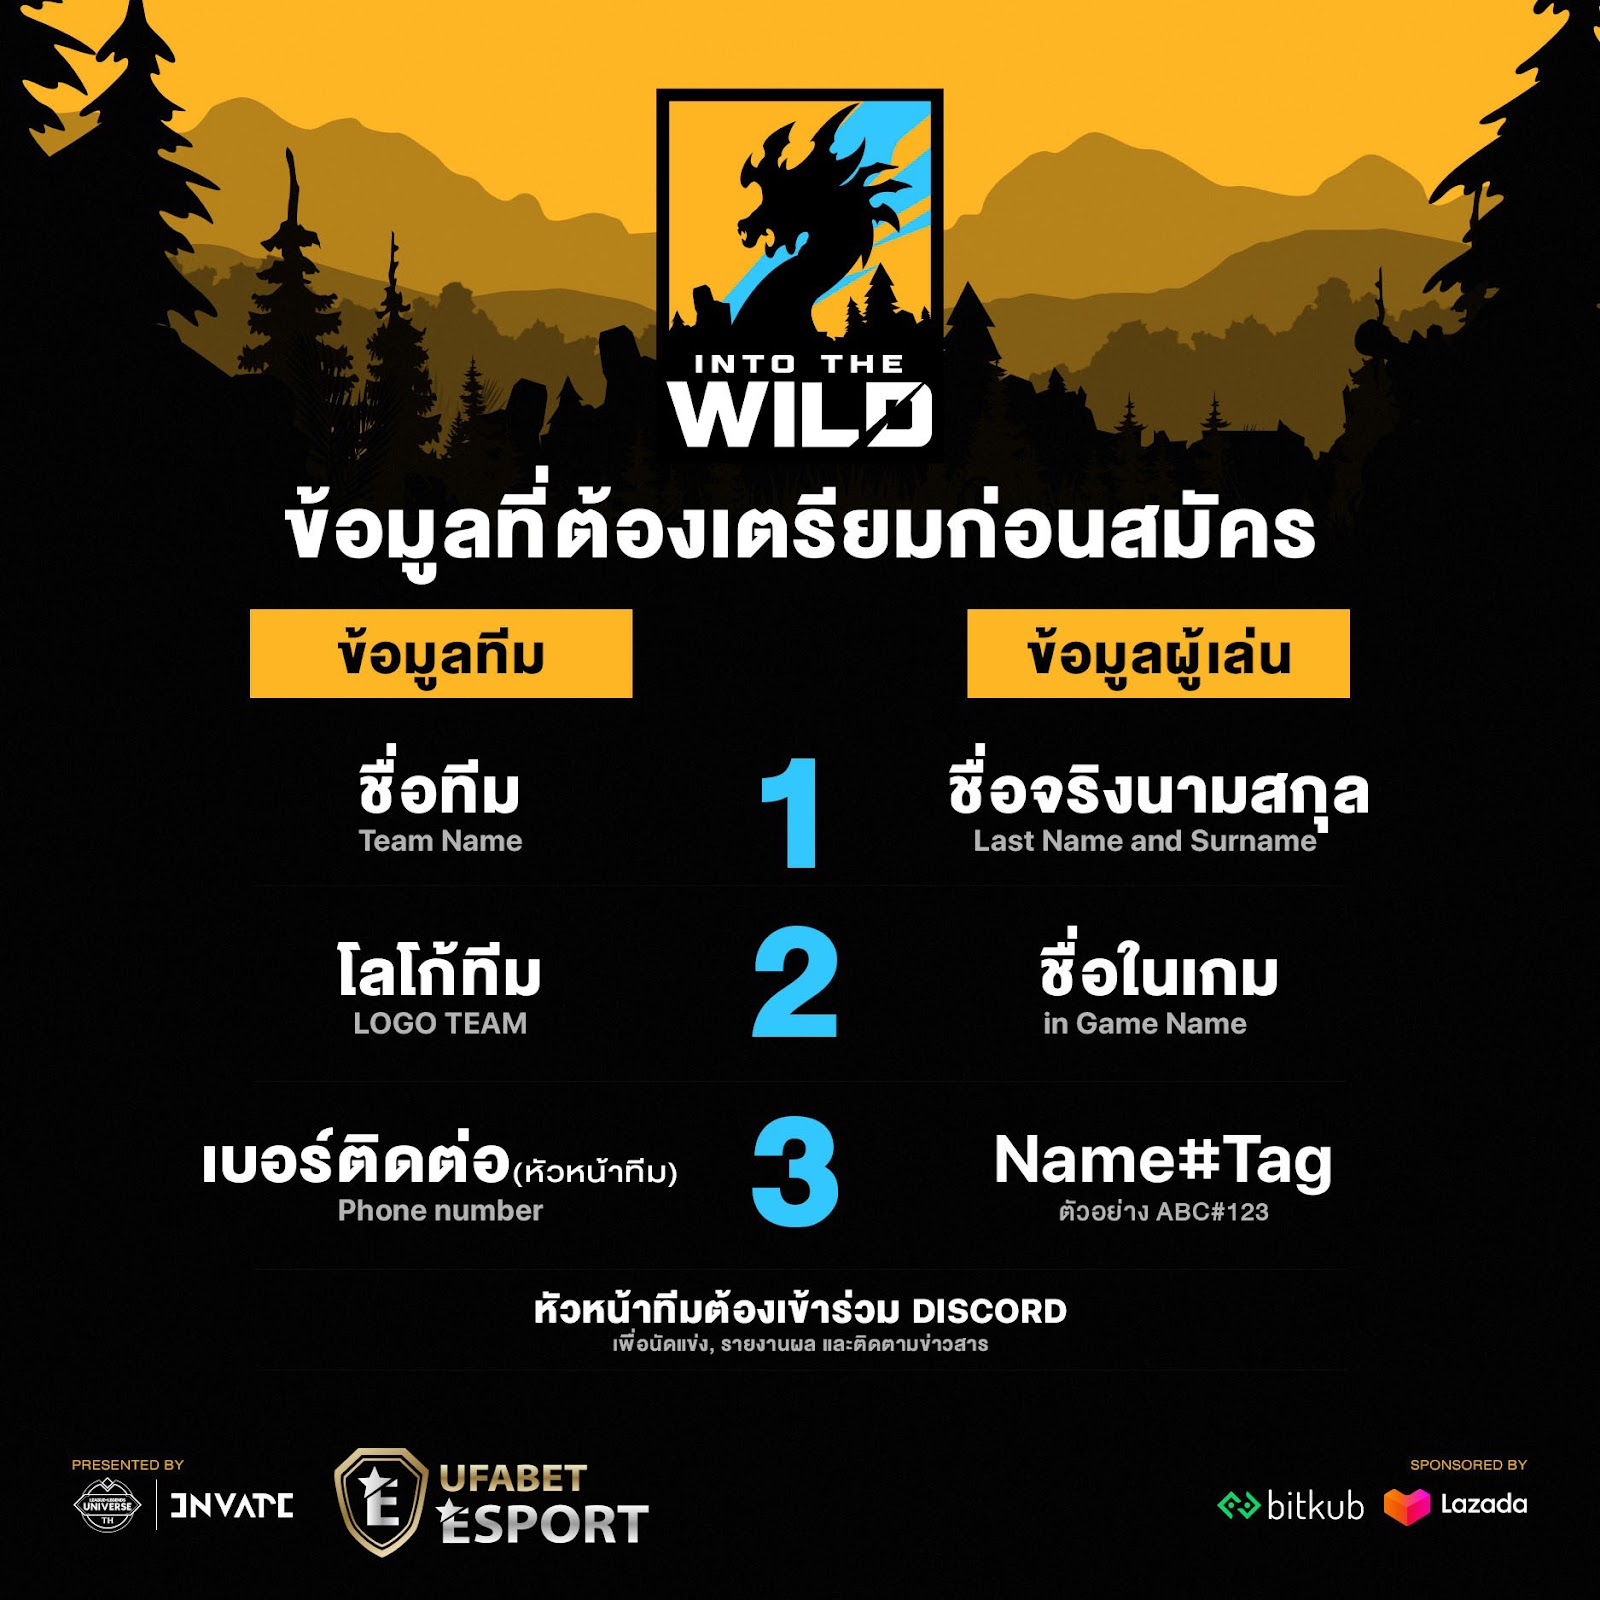 Into the Wild Tournament